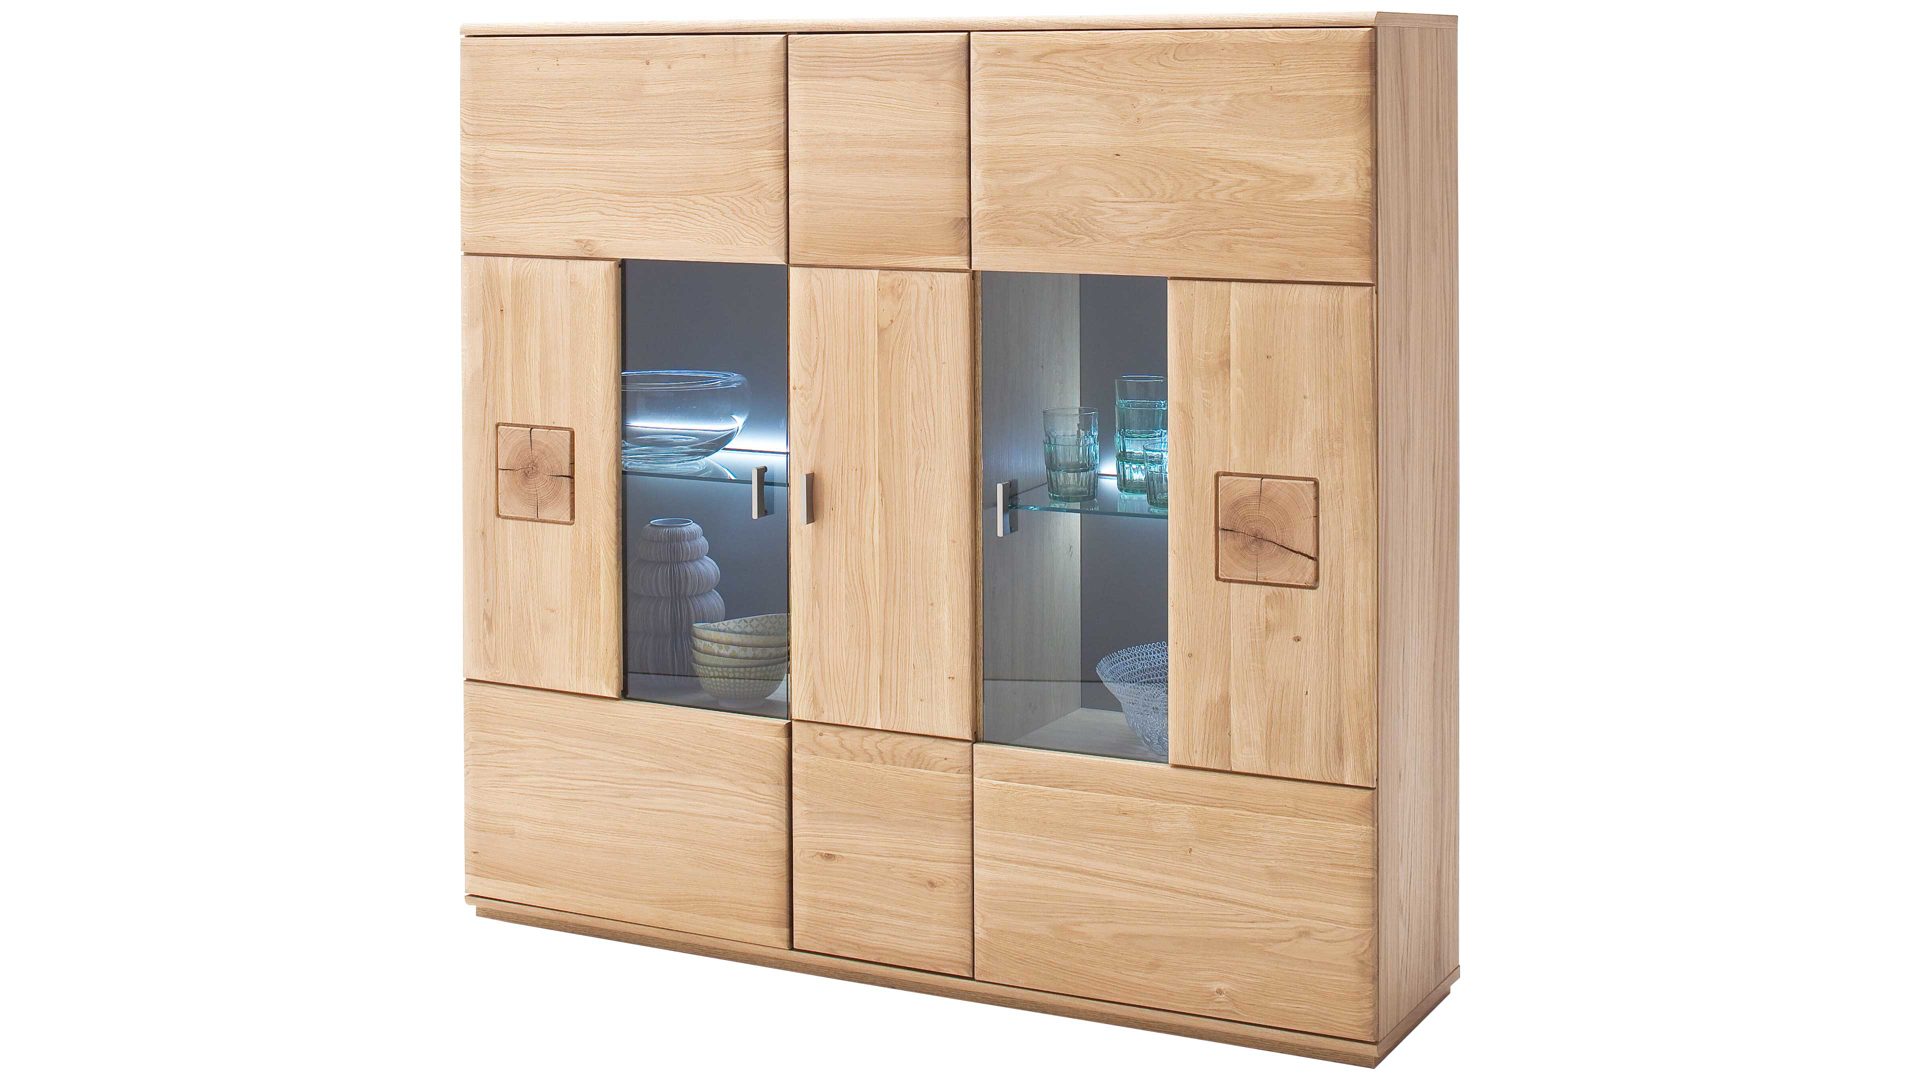 Highboard Mca furniture aus Holz in Holzfarben Eiche Bianco & Hirnholz – Highboard Bologna biancofarbenes Eichenholz & Hirnholz – drei Türen